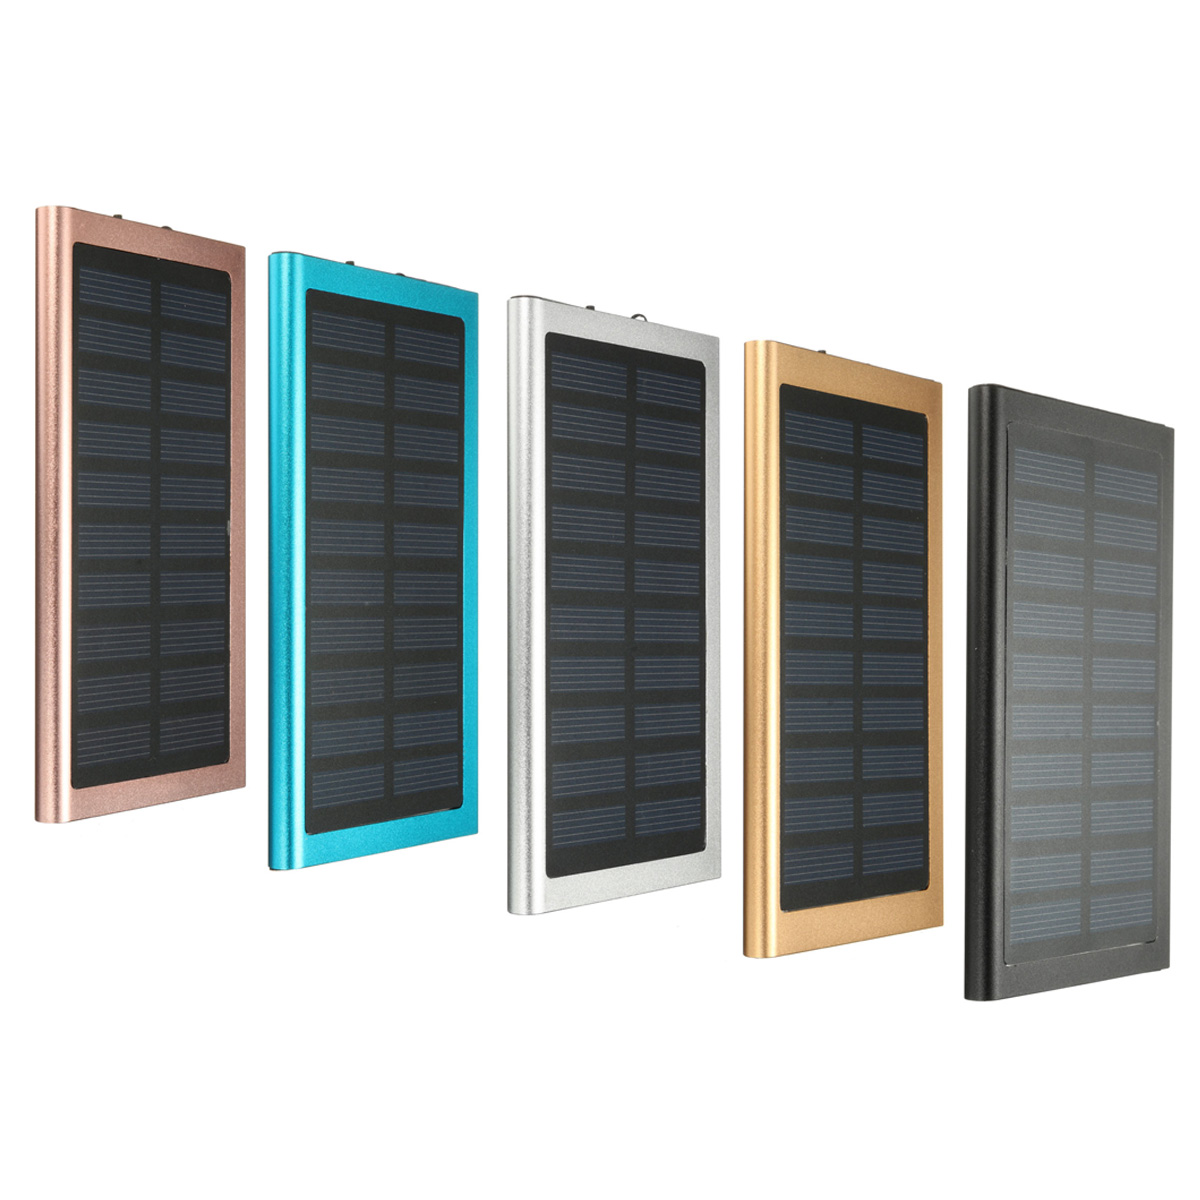  Солнечная Батарея Зарядное устройство Power Bank для iPhone iPad Таблетки Смартфон